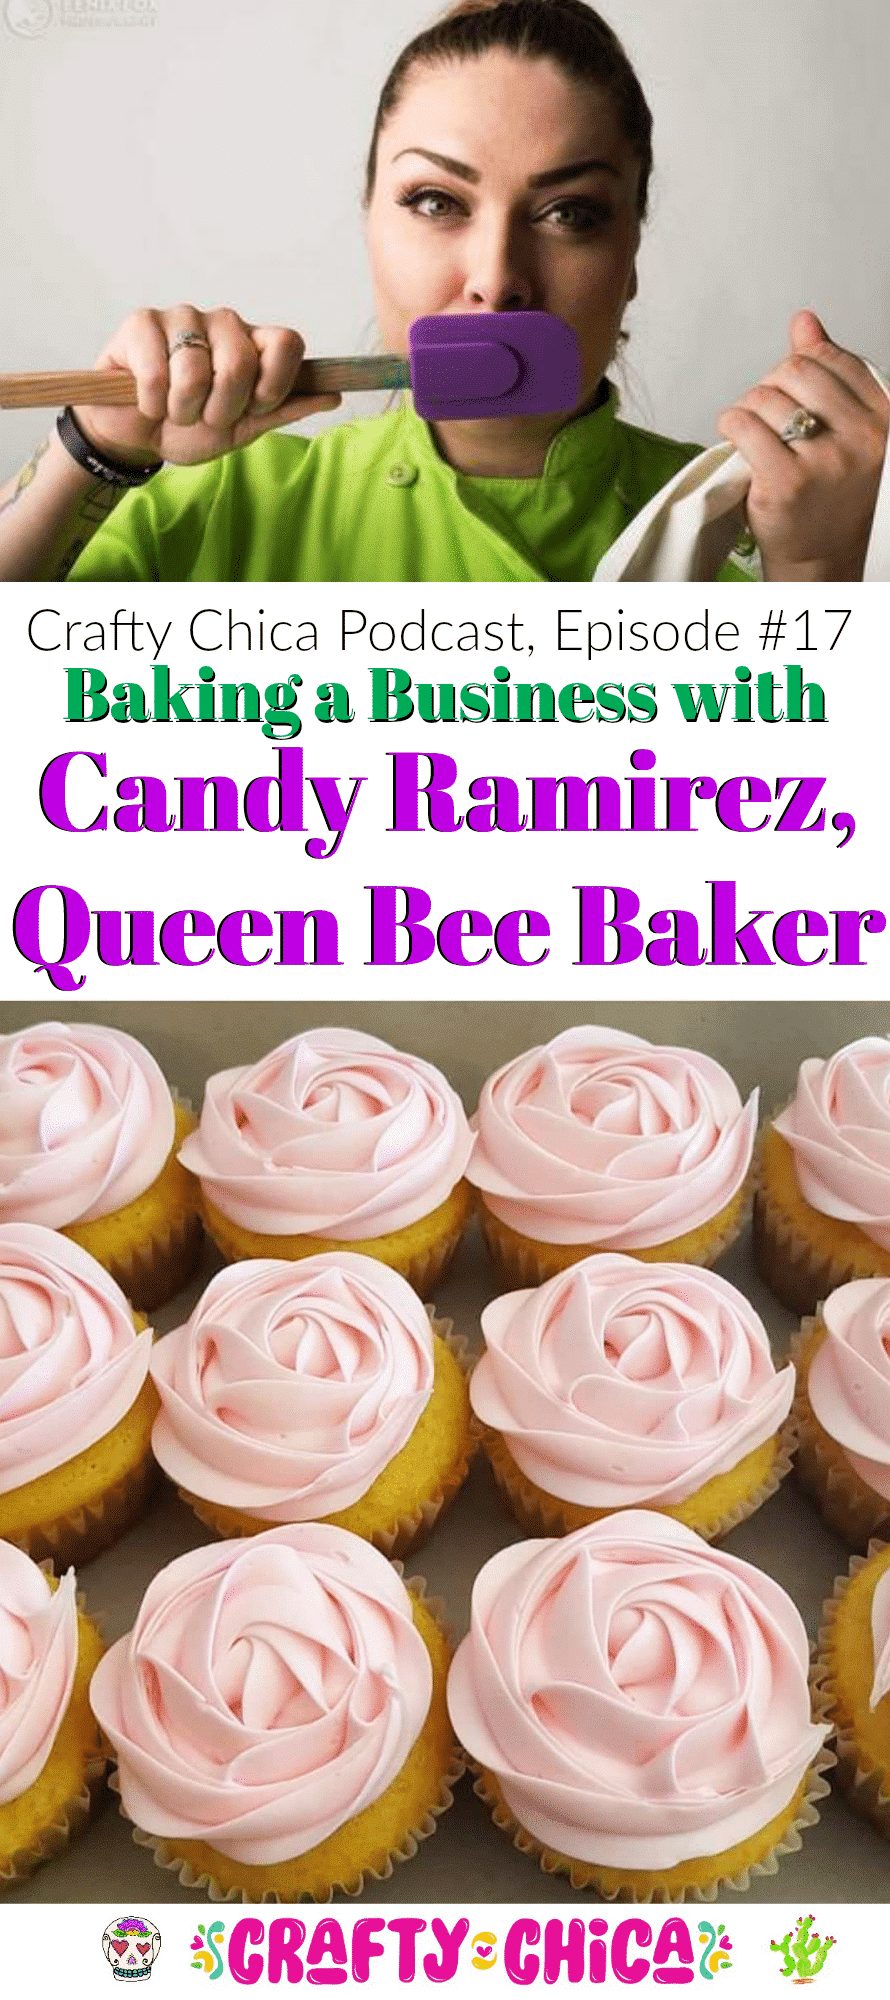 Candy Queen Bee Baker interview